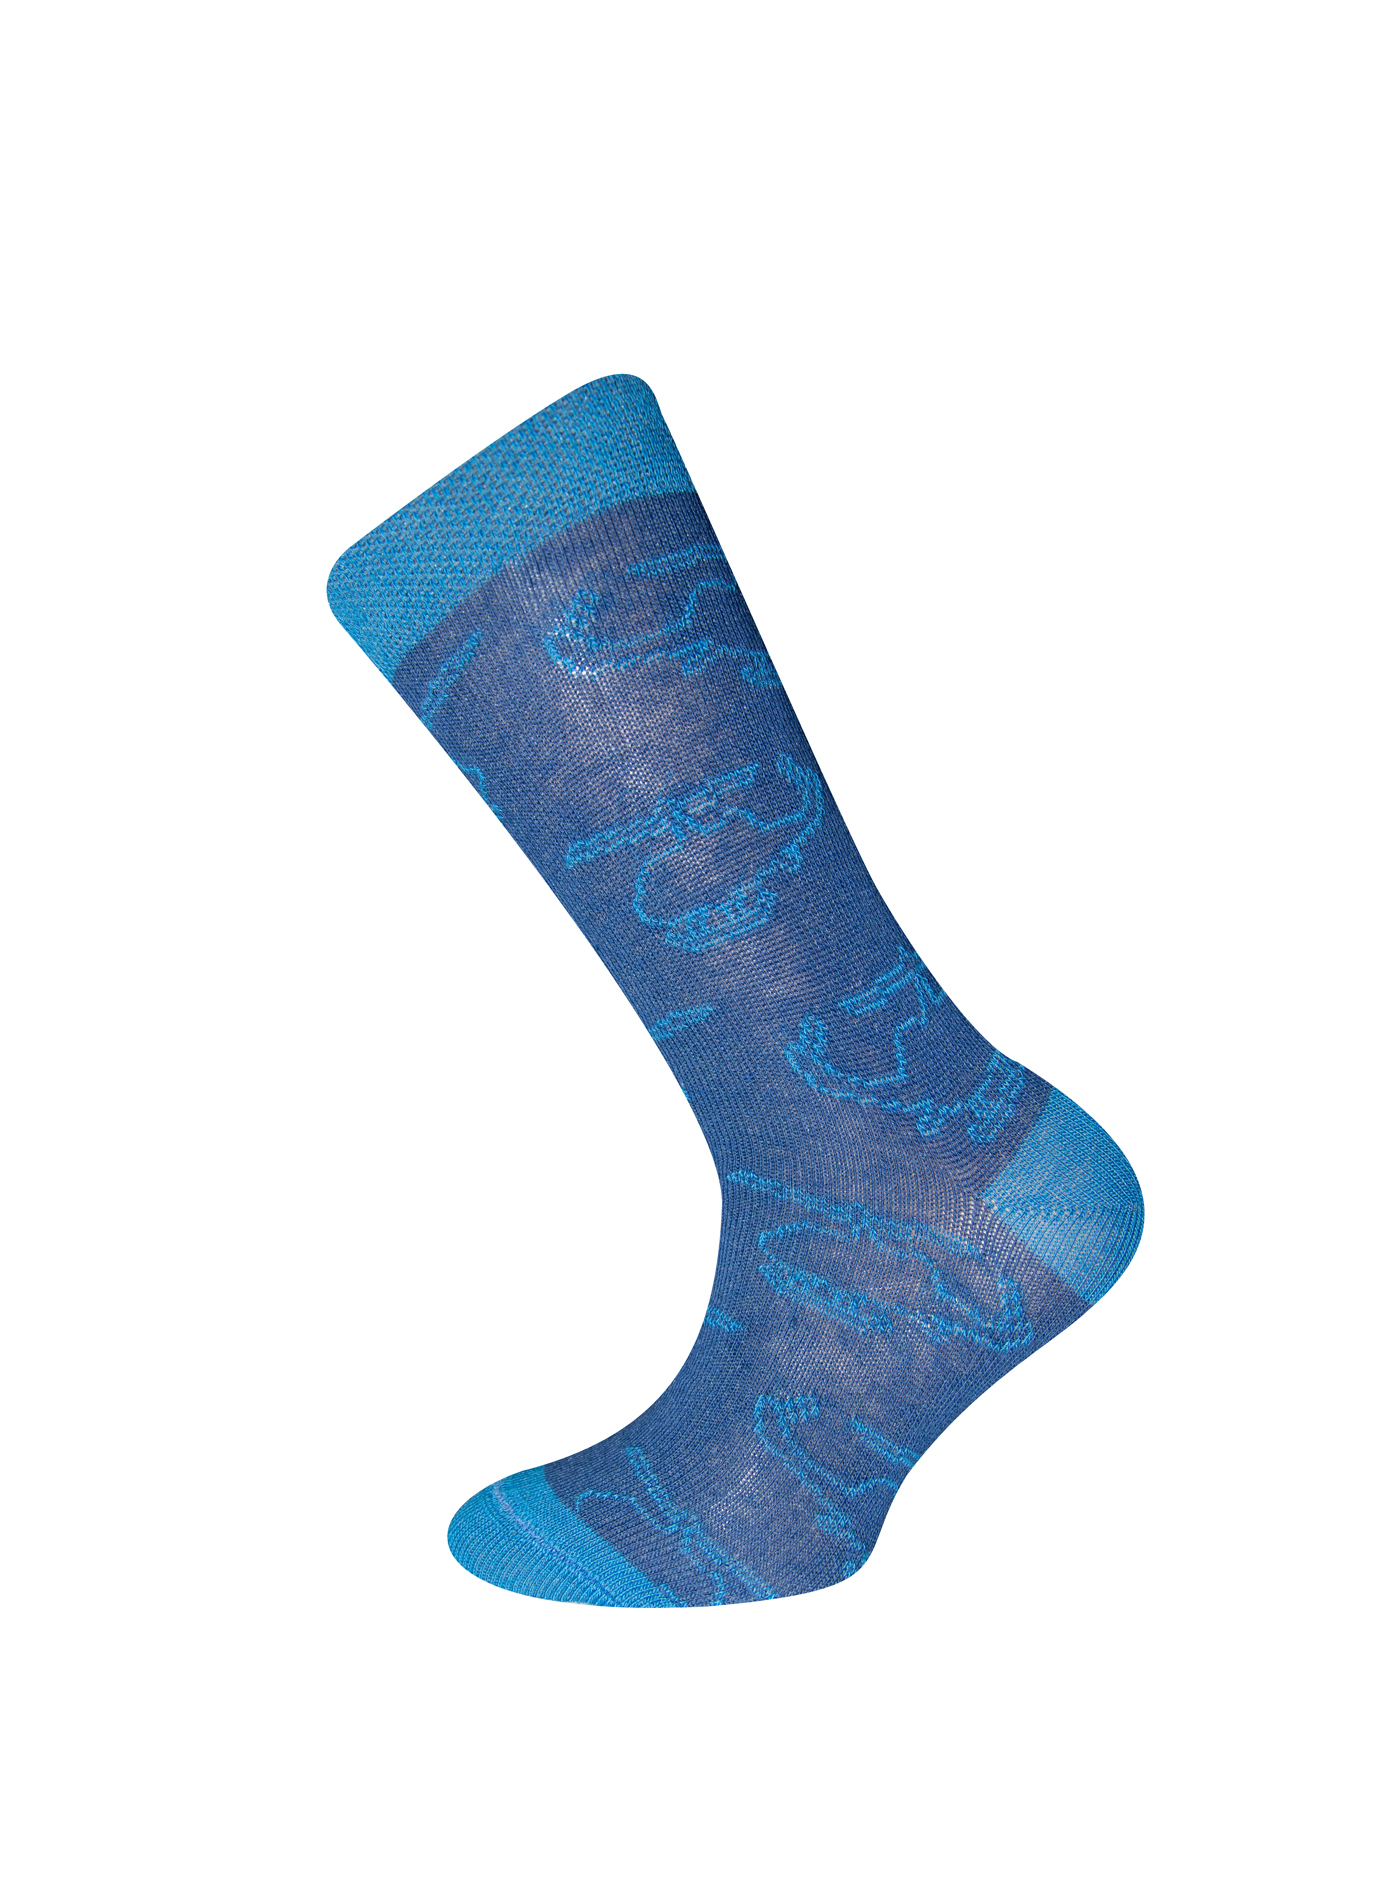 Jungen-Socken (Doppelpack) Blau